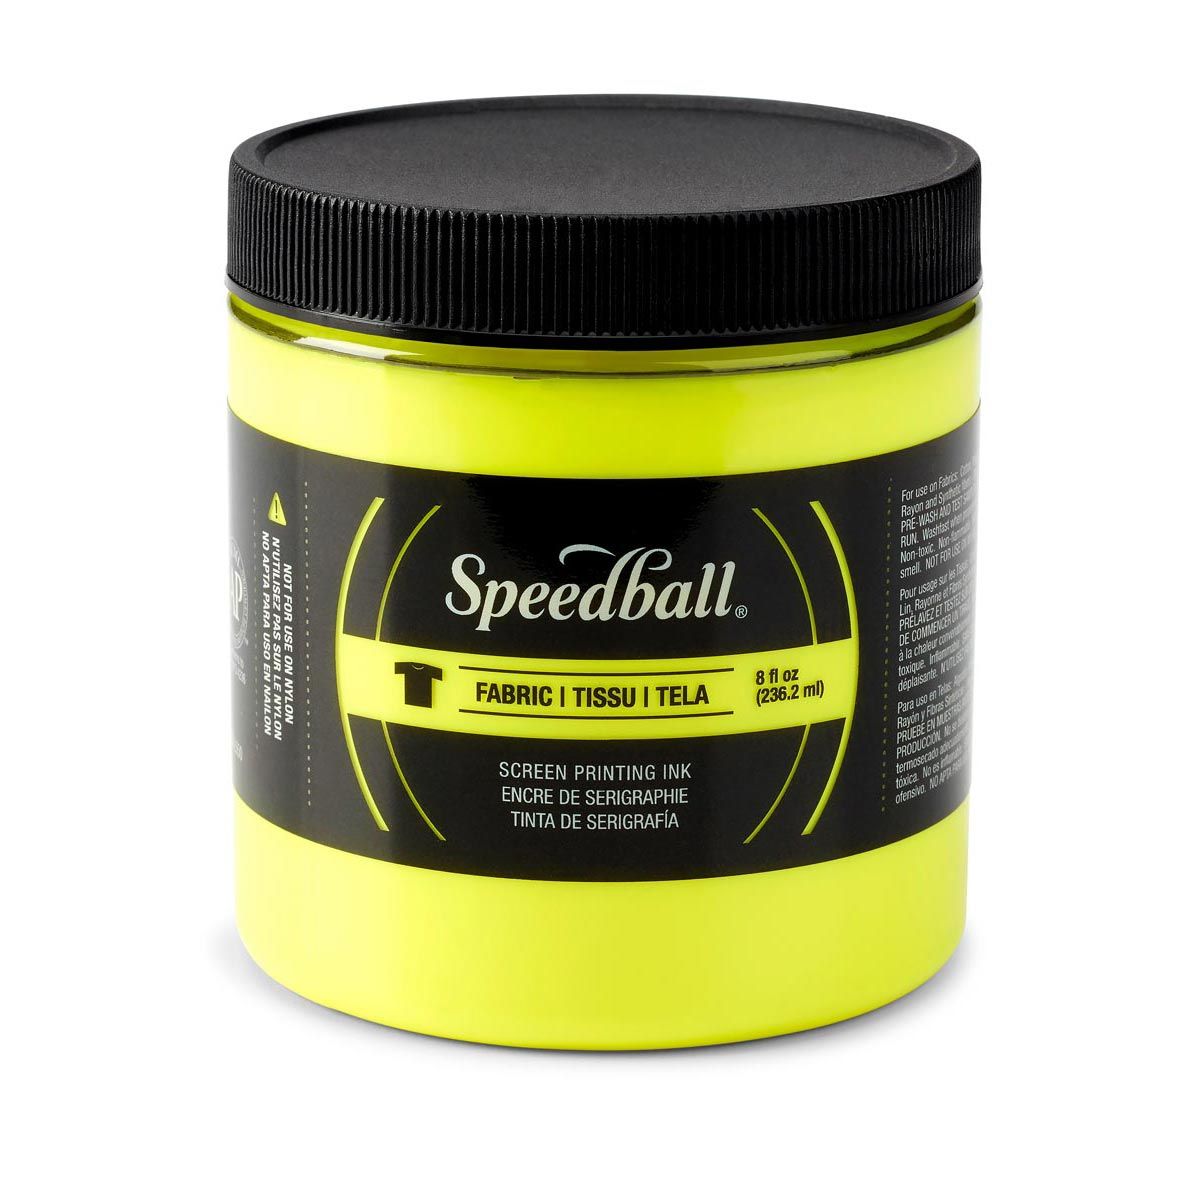 Speedball Fluorescent Screen Printing Fabric Ink - Yellow 8oz